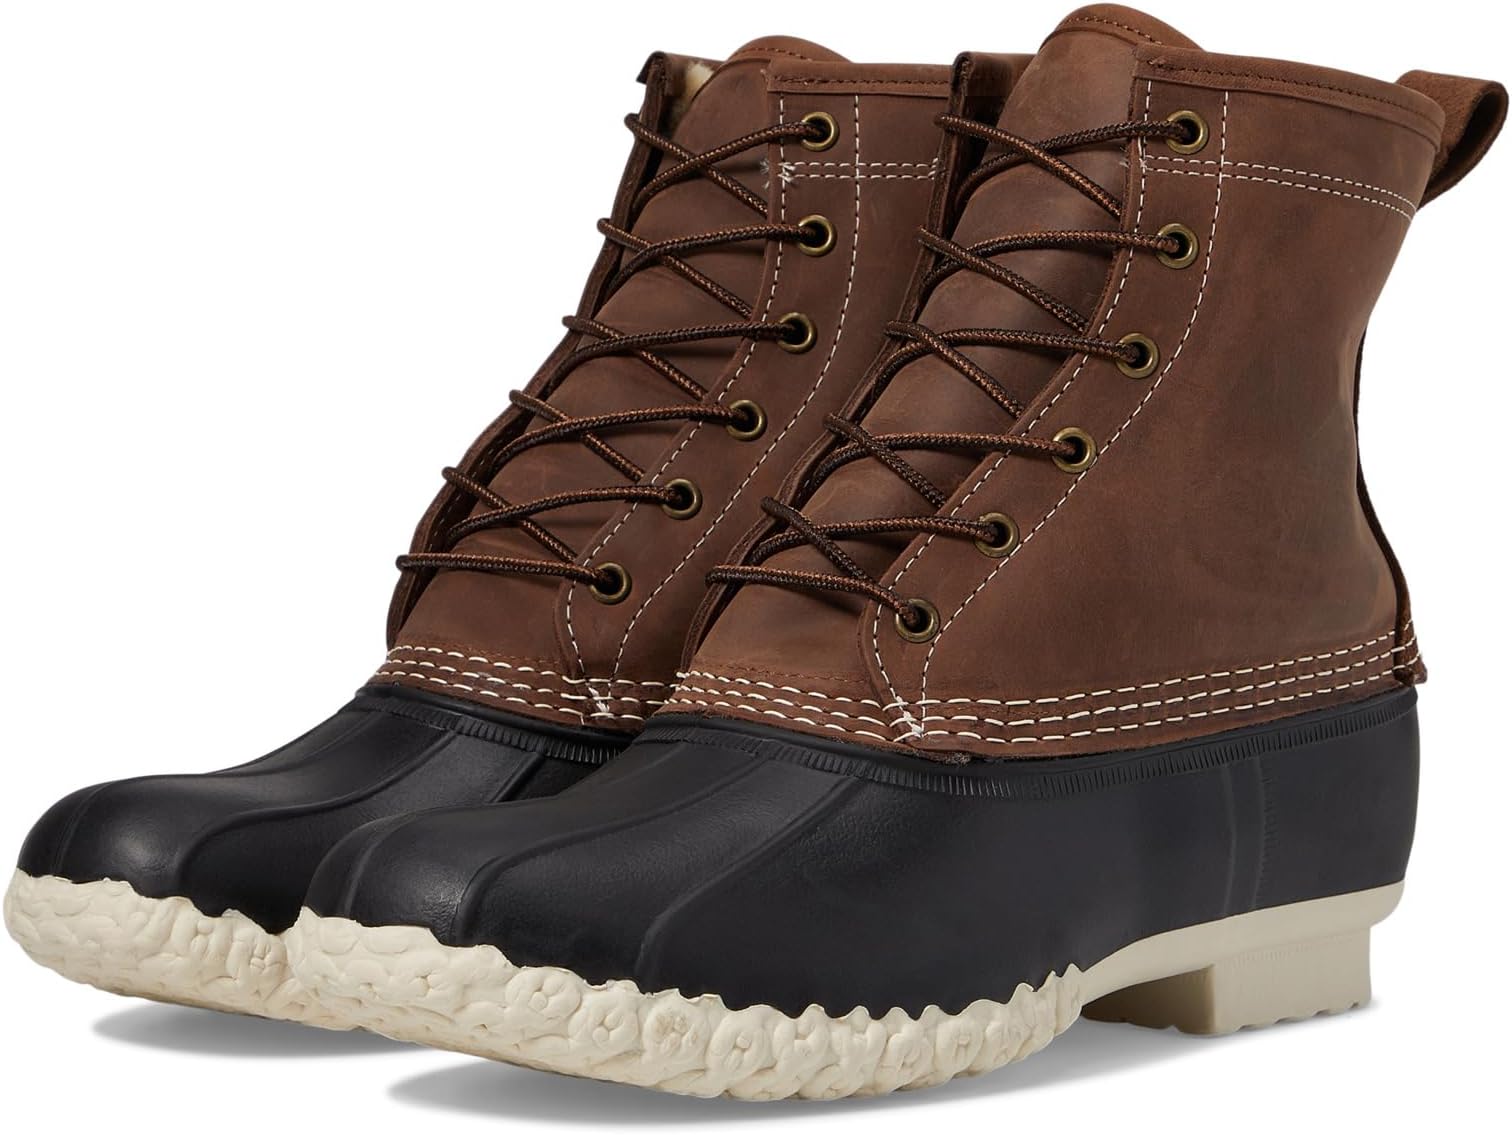 Зимние ботинки Bean Boot 8 Limited Edition Leather Shearling Lined L.L.Bean, цвет Dark Earth/Black/Natural earth s natural alternative компостируемые повторно закрывающиеся пакеты квартовый пакет 40 штук